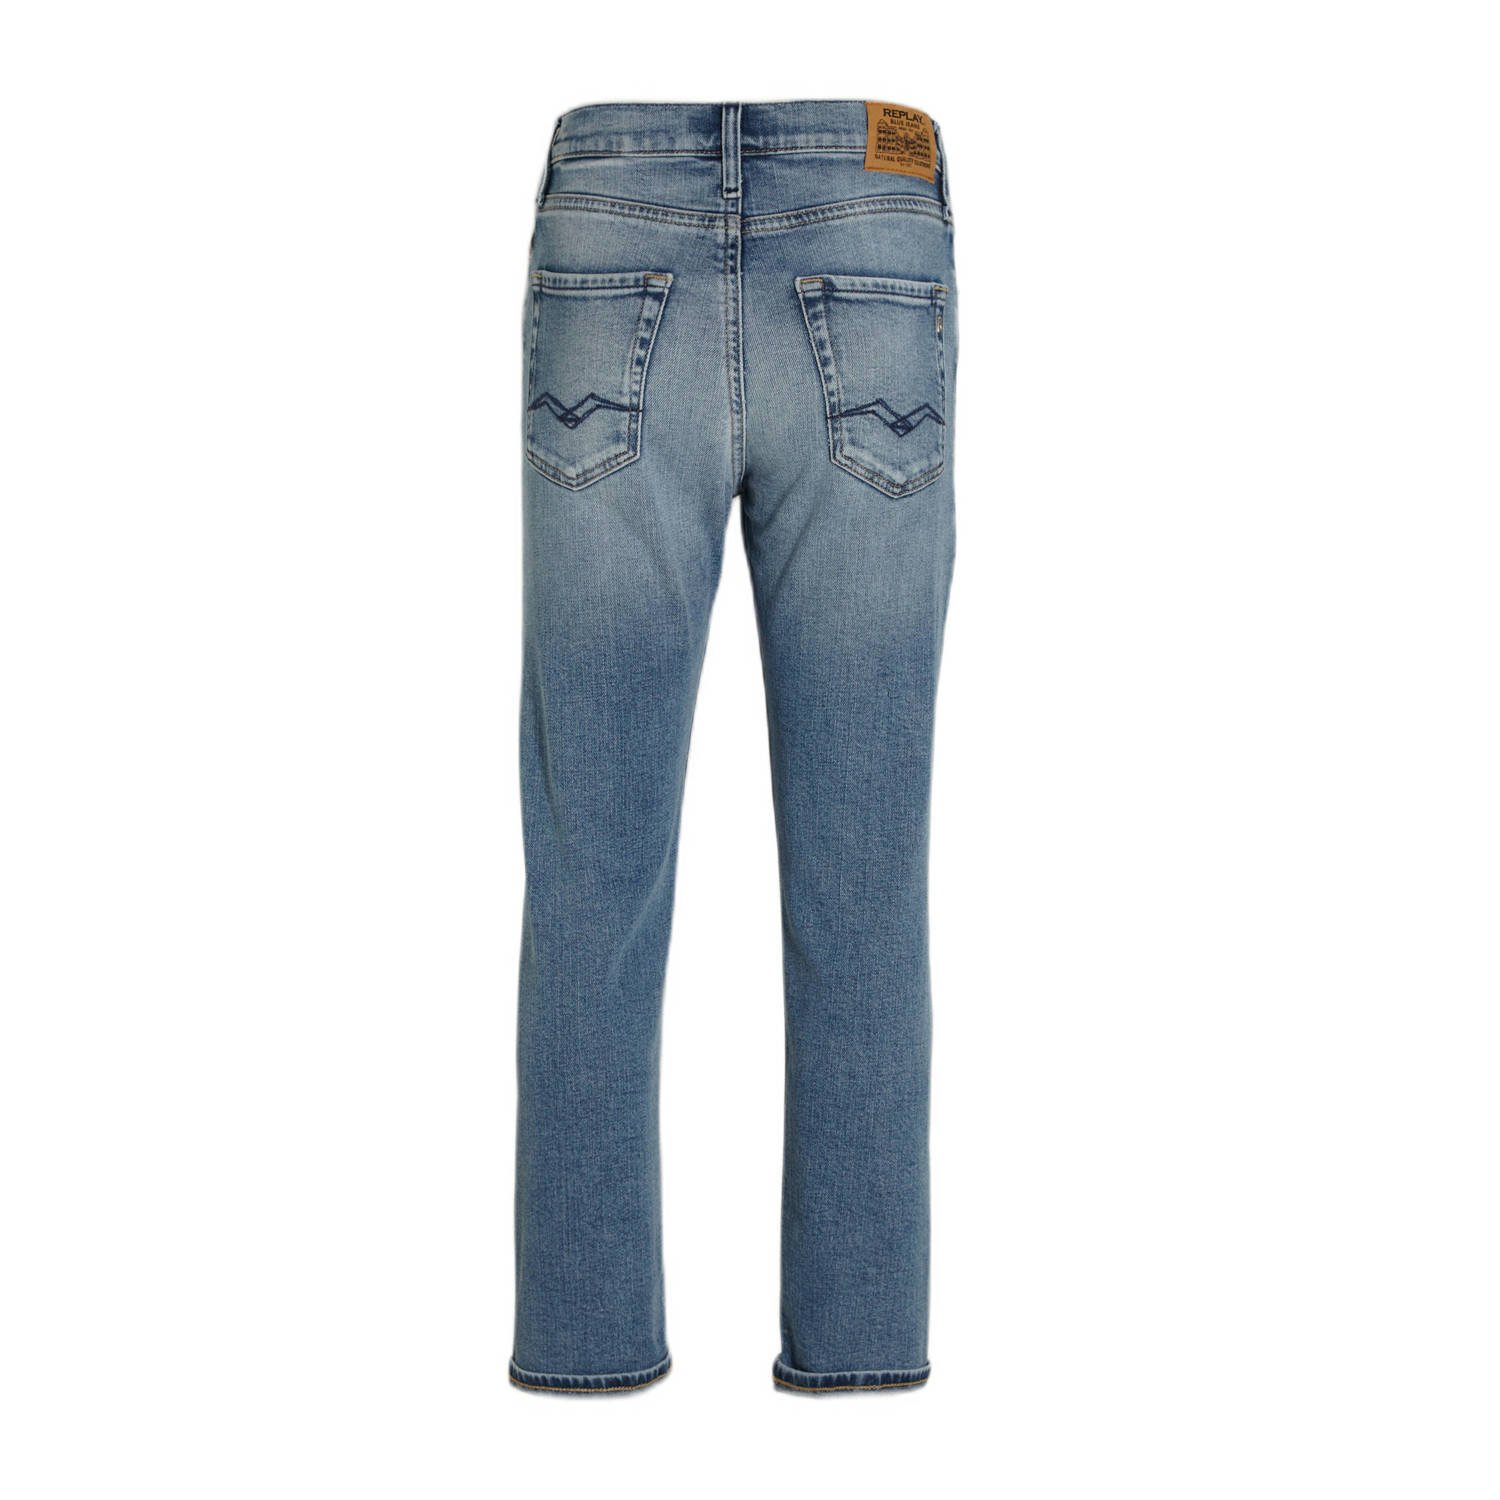 REPLAY slim fit jeans light blue denim